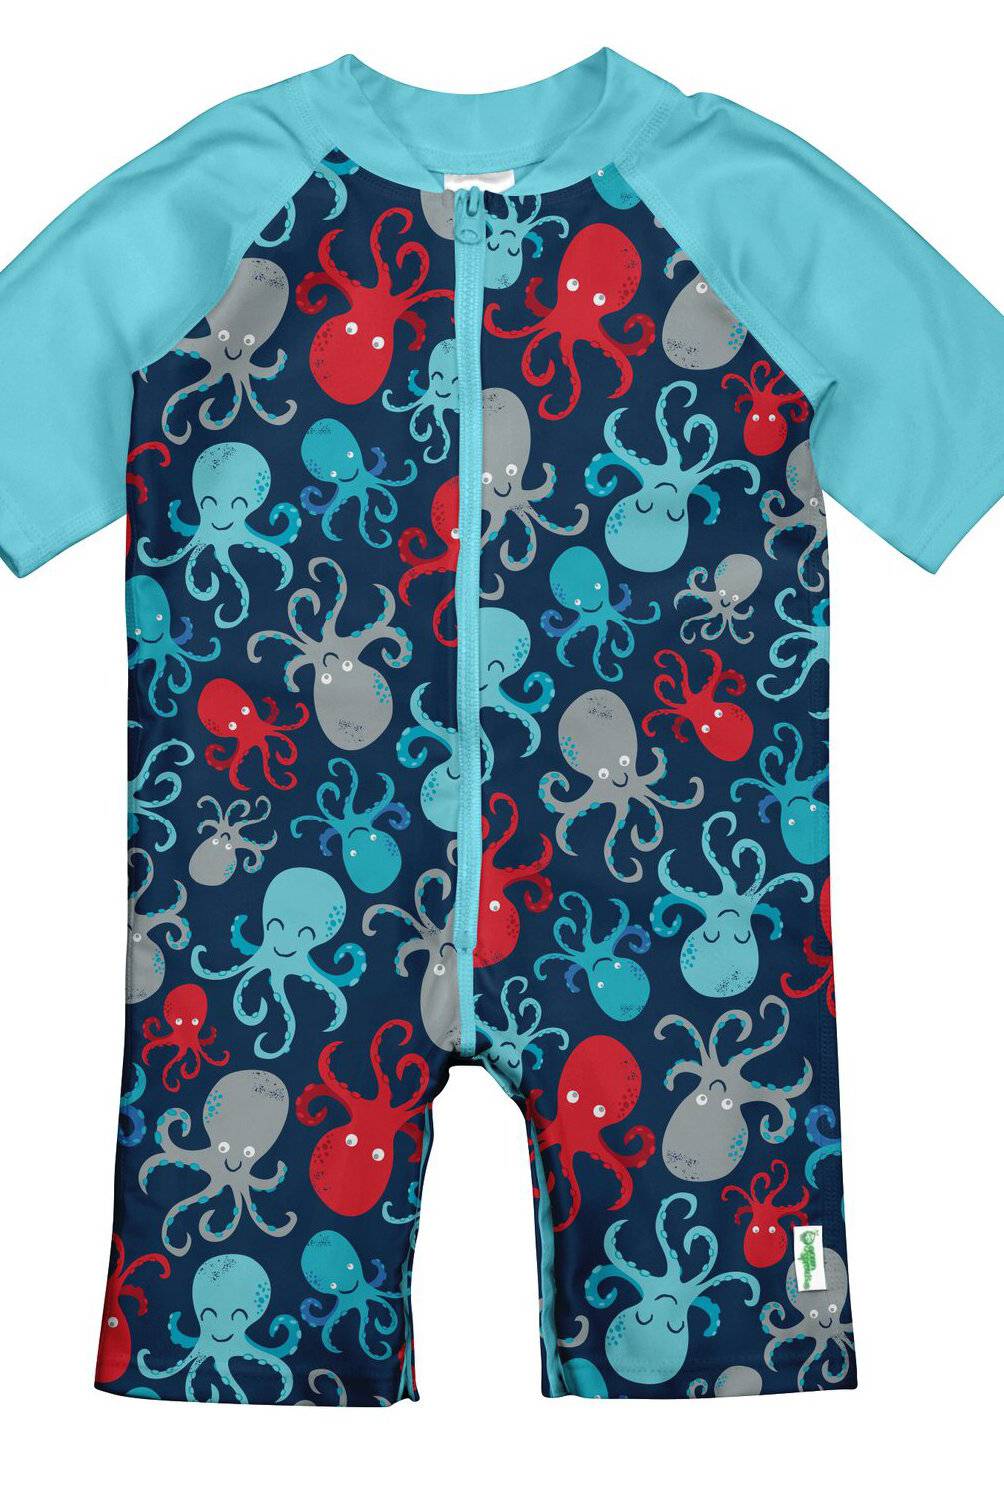 IPLAY - Traje de Baño Swimsuit Azul Octopus